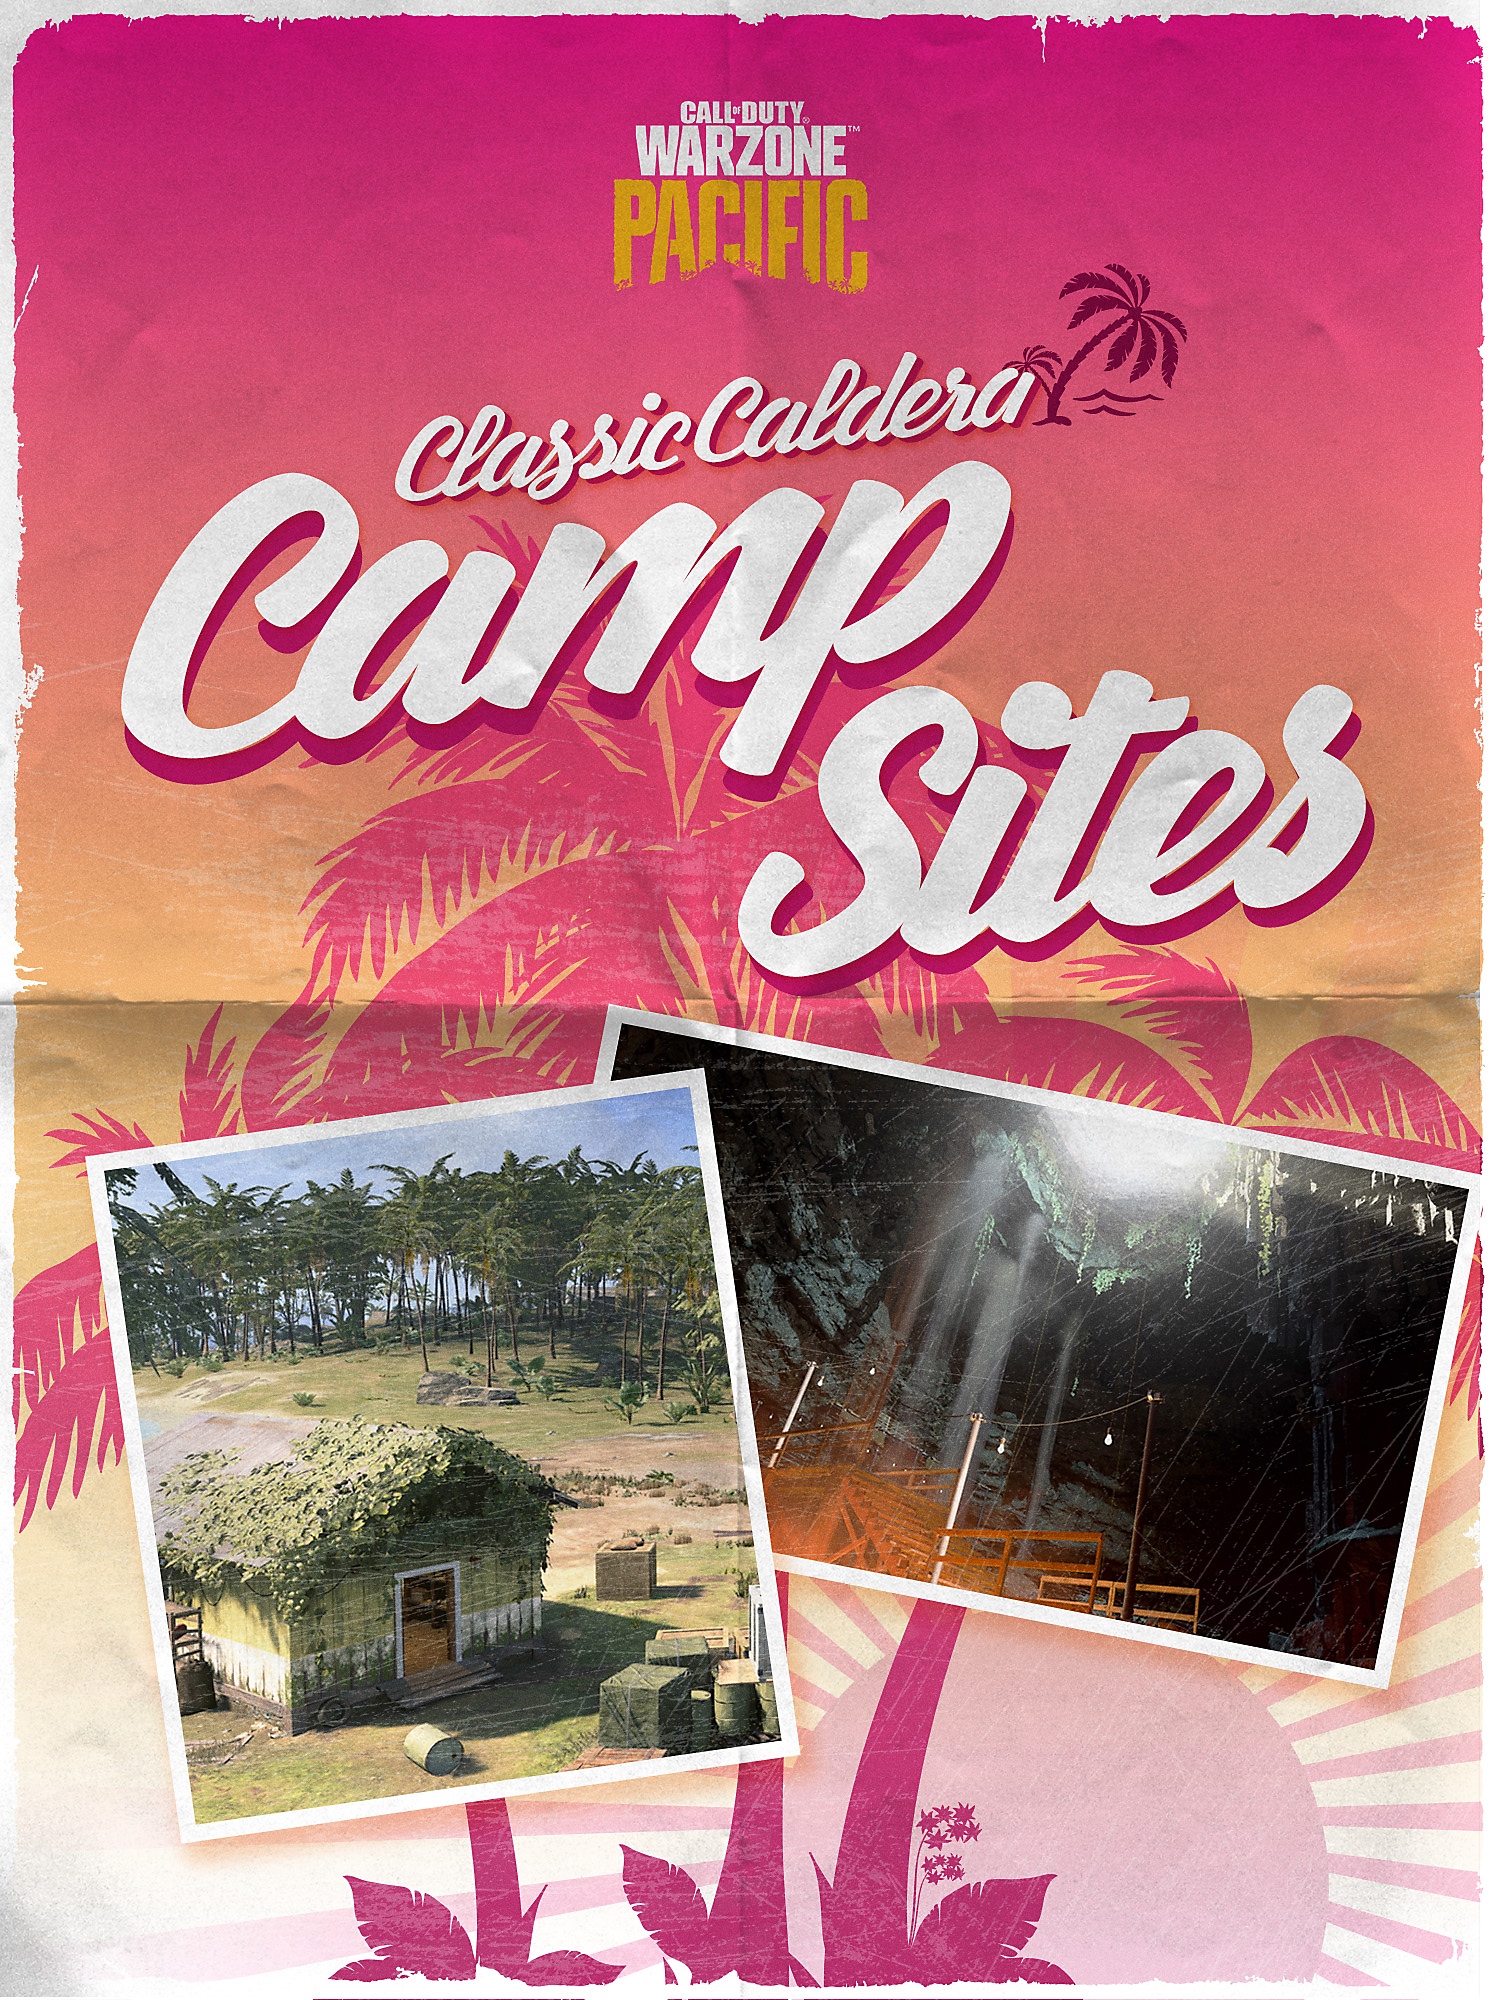 Page de couverture de la brochure Les campings de Caldera